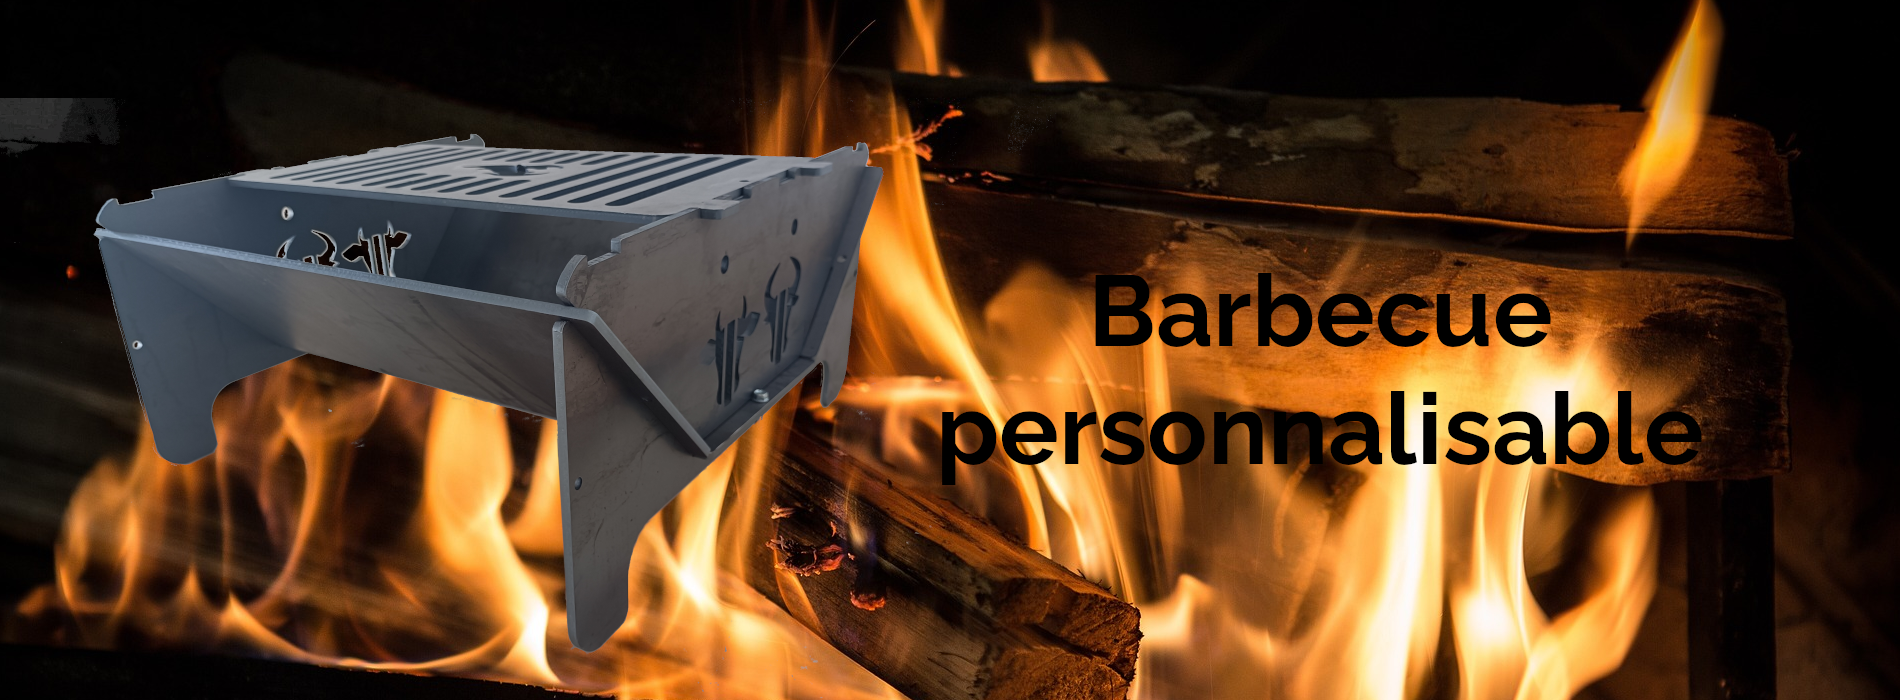 BBQ Barbecue Personnalisable Et Portable